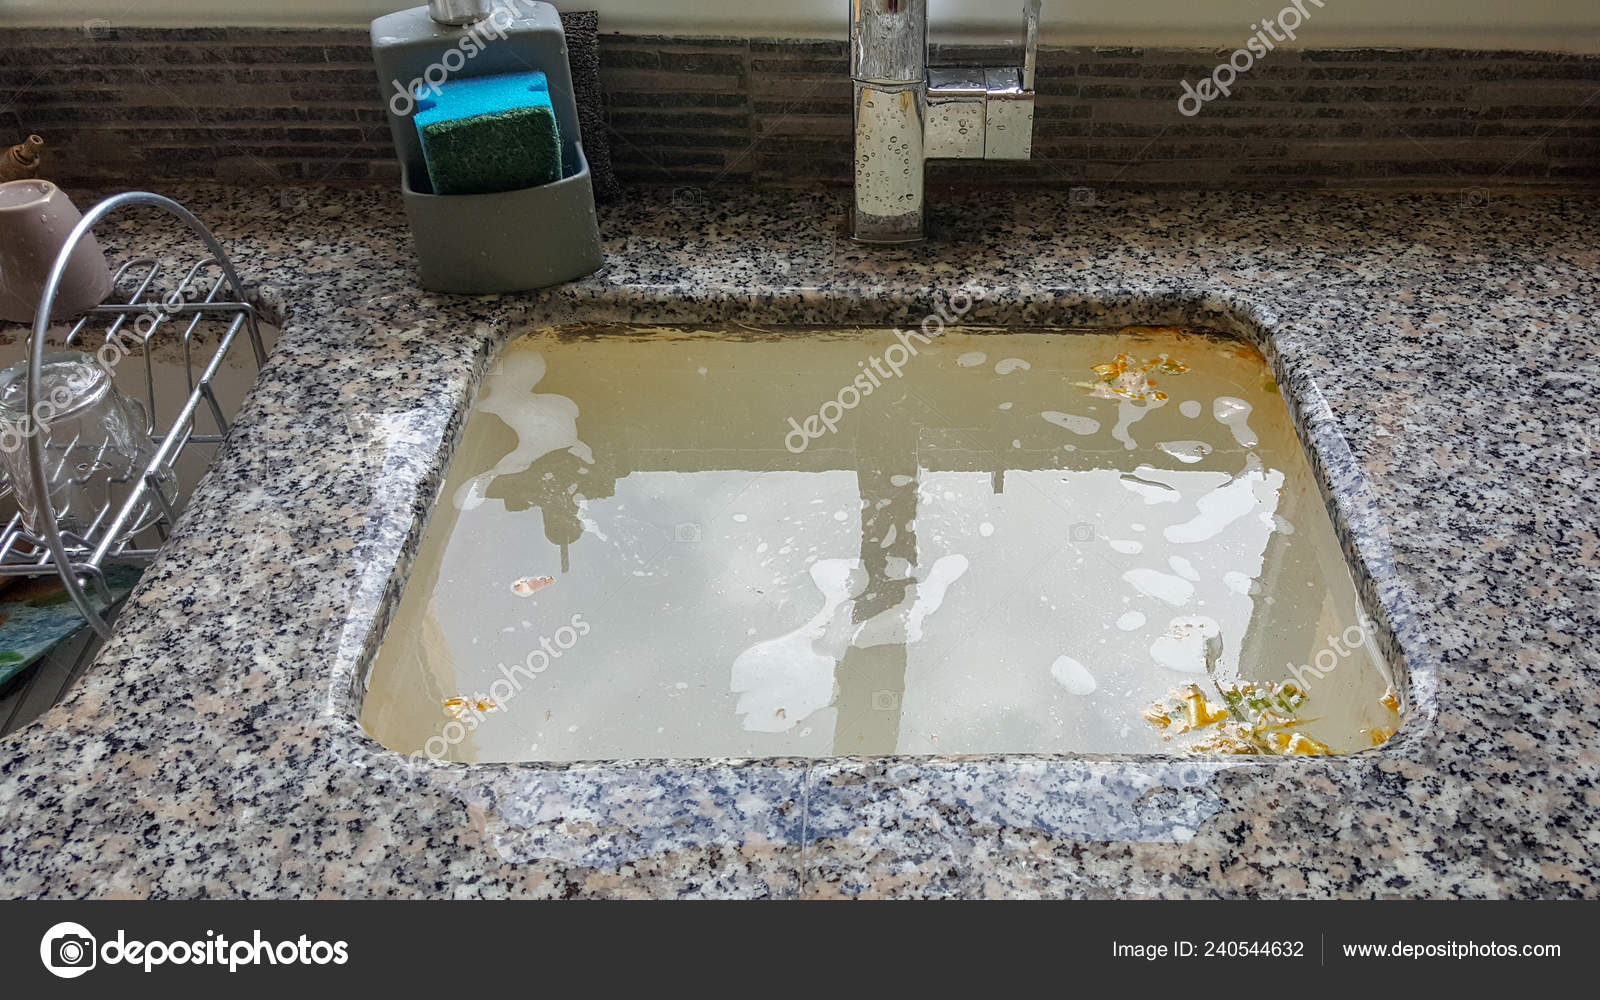 https://st4.depositphotos.com/22682272/24054/i/1600/depositphotos_240544632-stock-photo-overflowing-kitchen-sink-clogged-drain.jpg